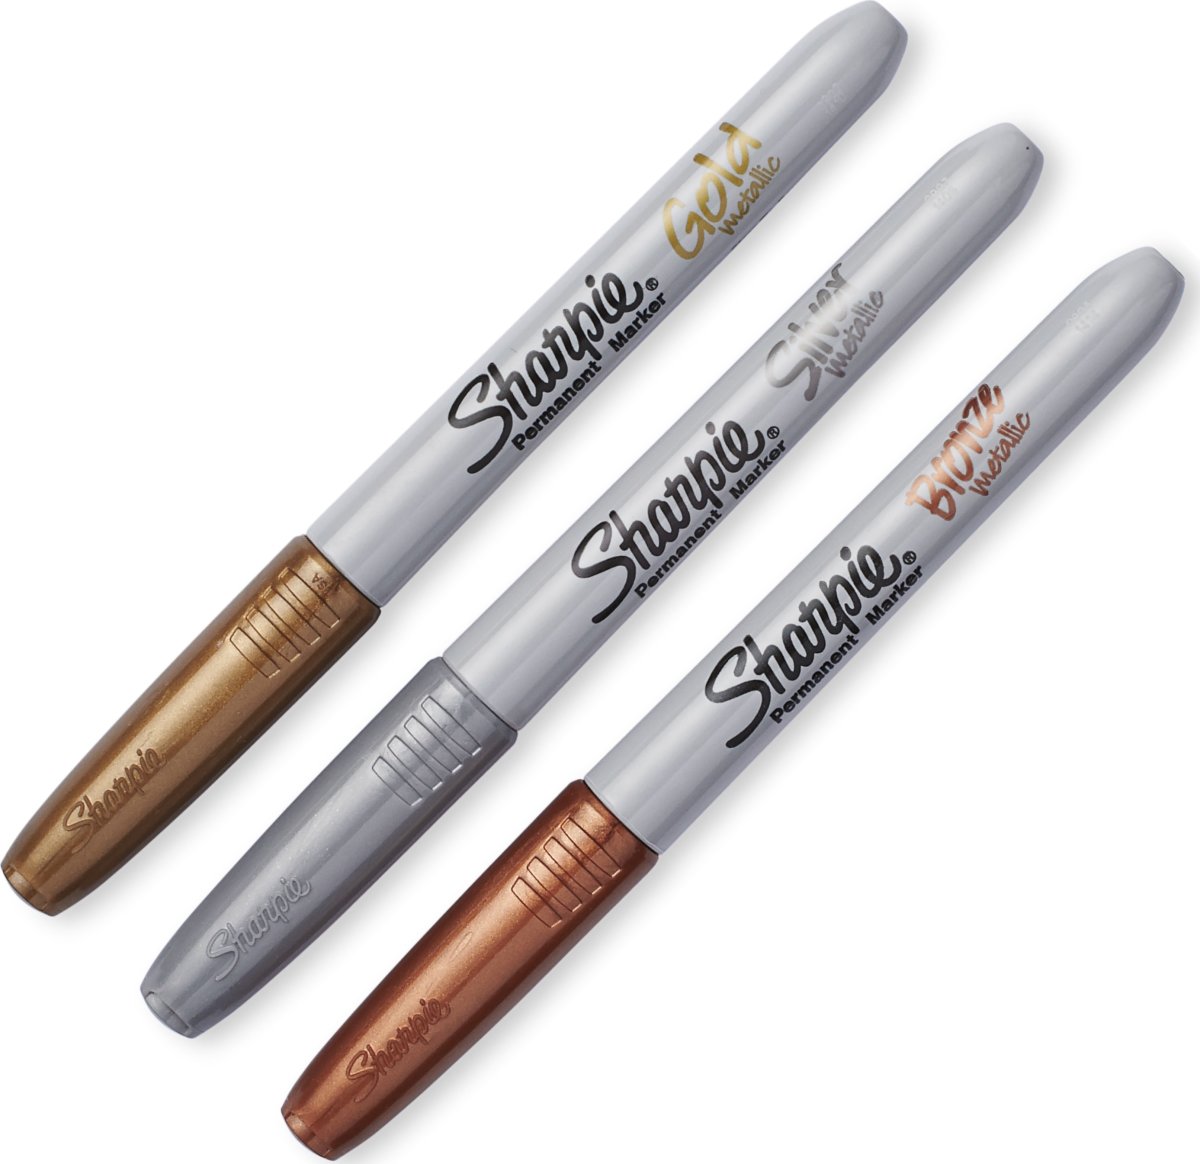 Sharpie Permanent Marker | F | Guld, silver, brons